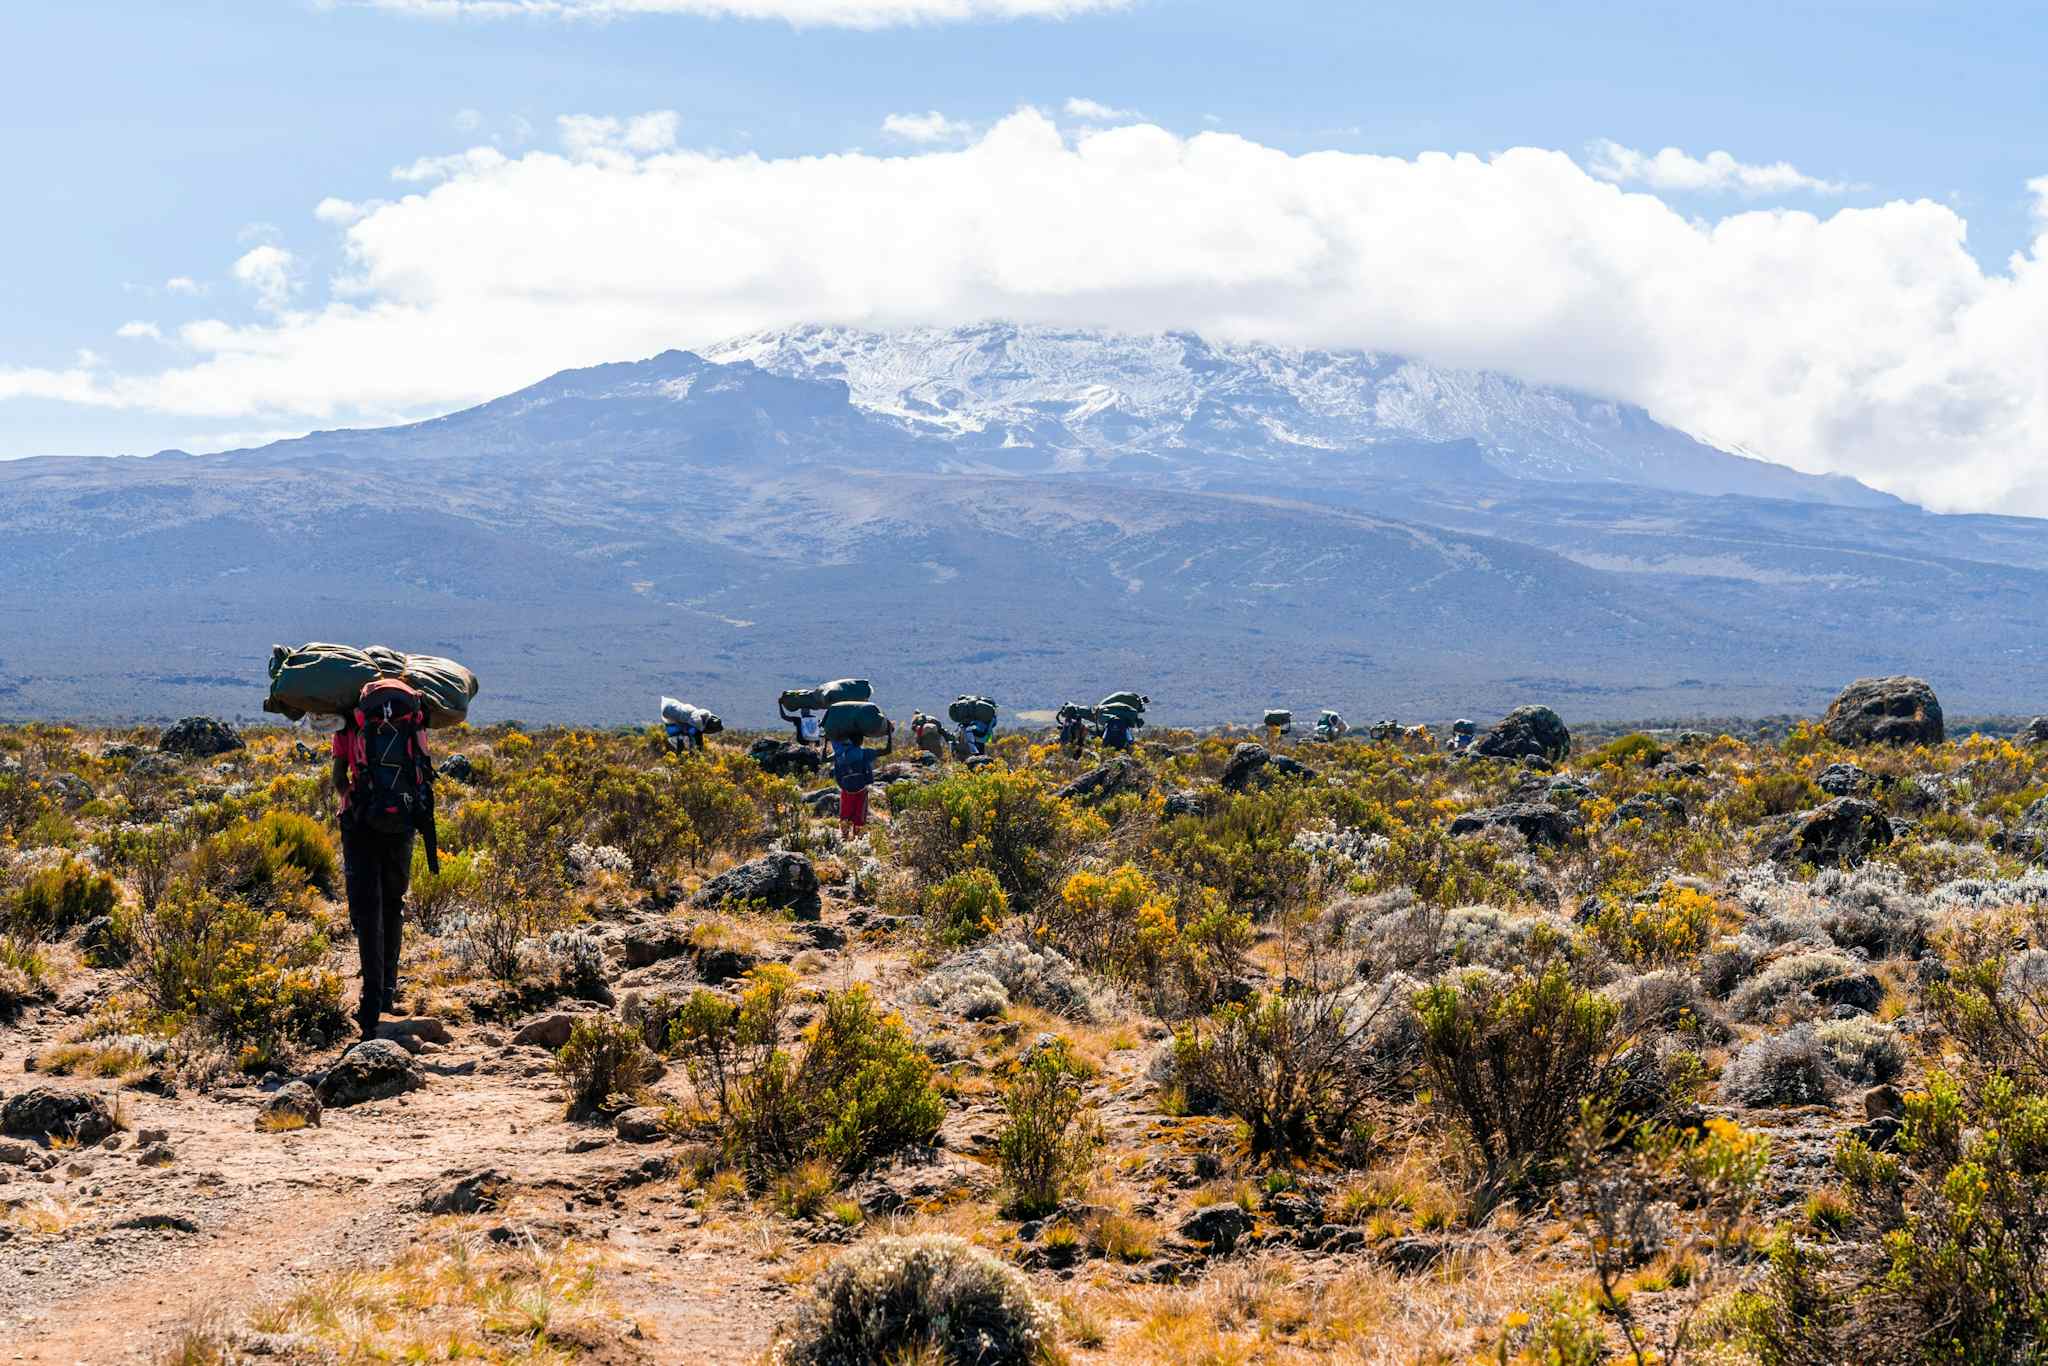 Porters crossing the moorland zone of Mount Kilimanjaro, Tanzania.